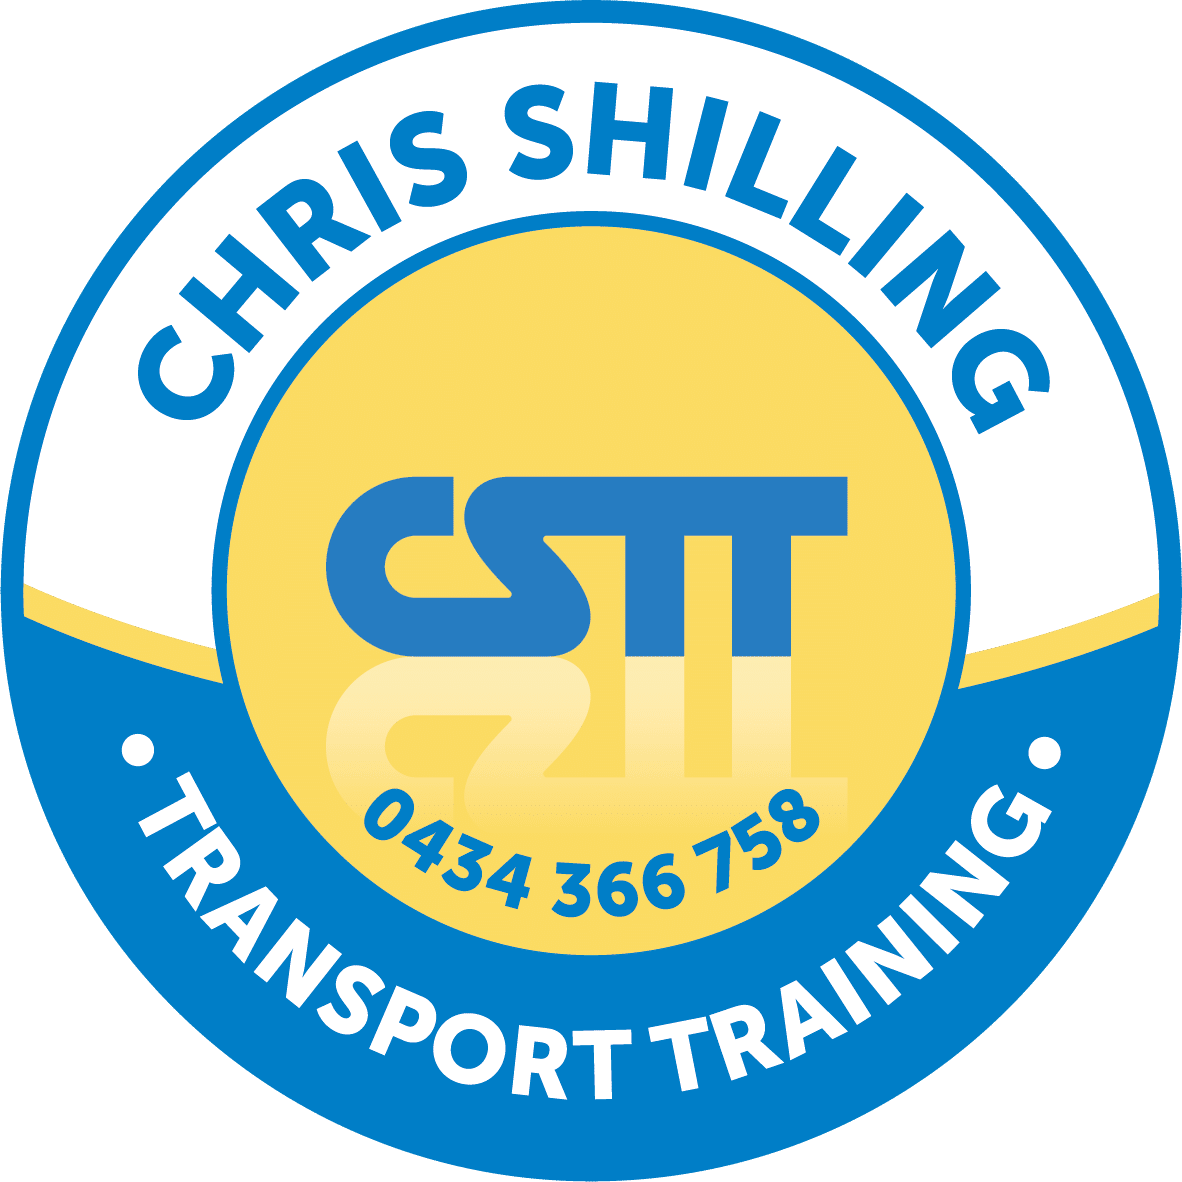 Chris Shilling Transport Training (CSTT) Logo